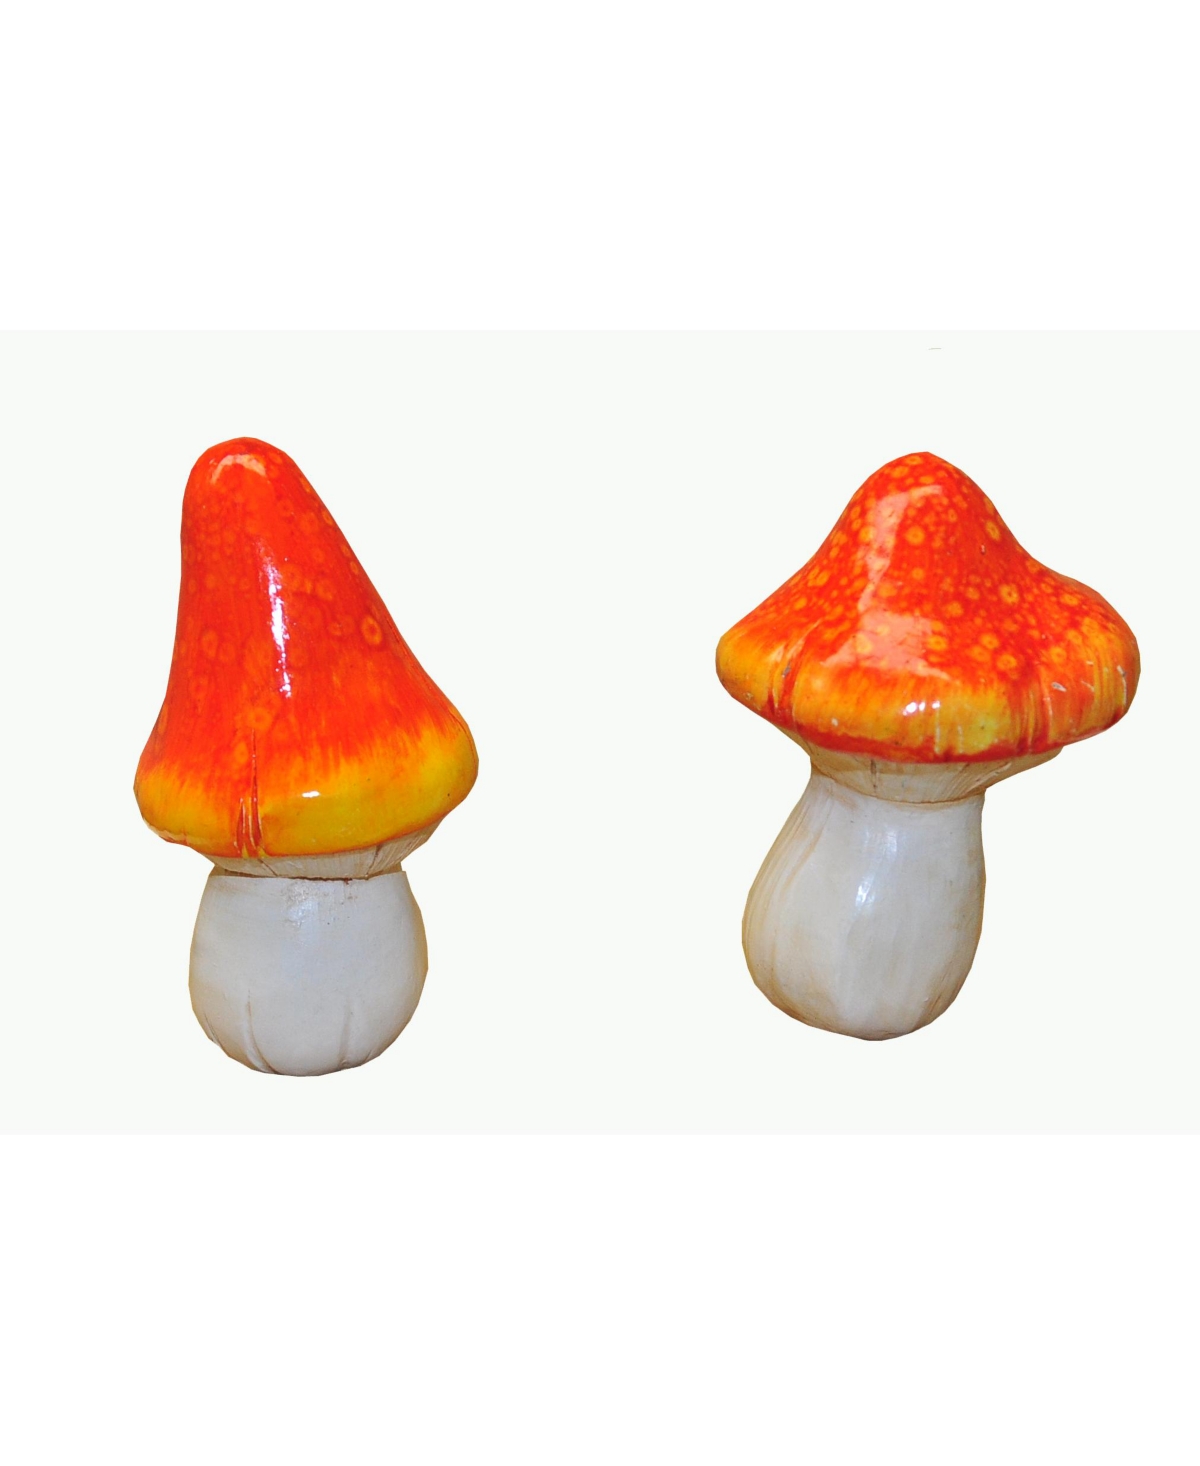 Garden Life Size Mushroom Statue, 2 pieces, Orange - Orange